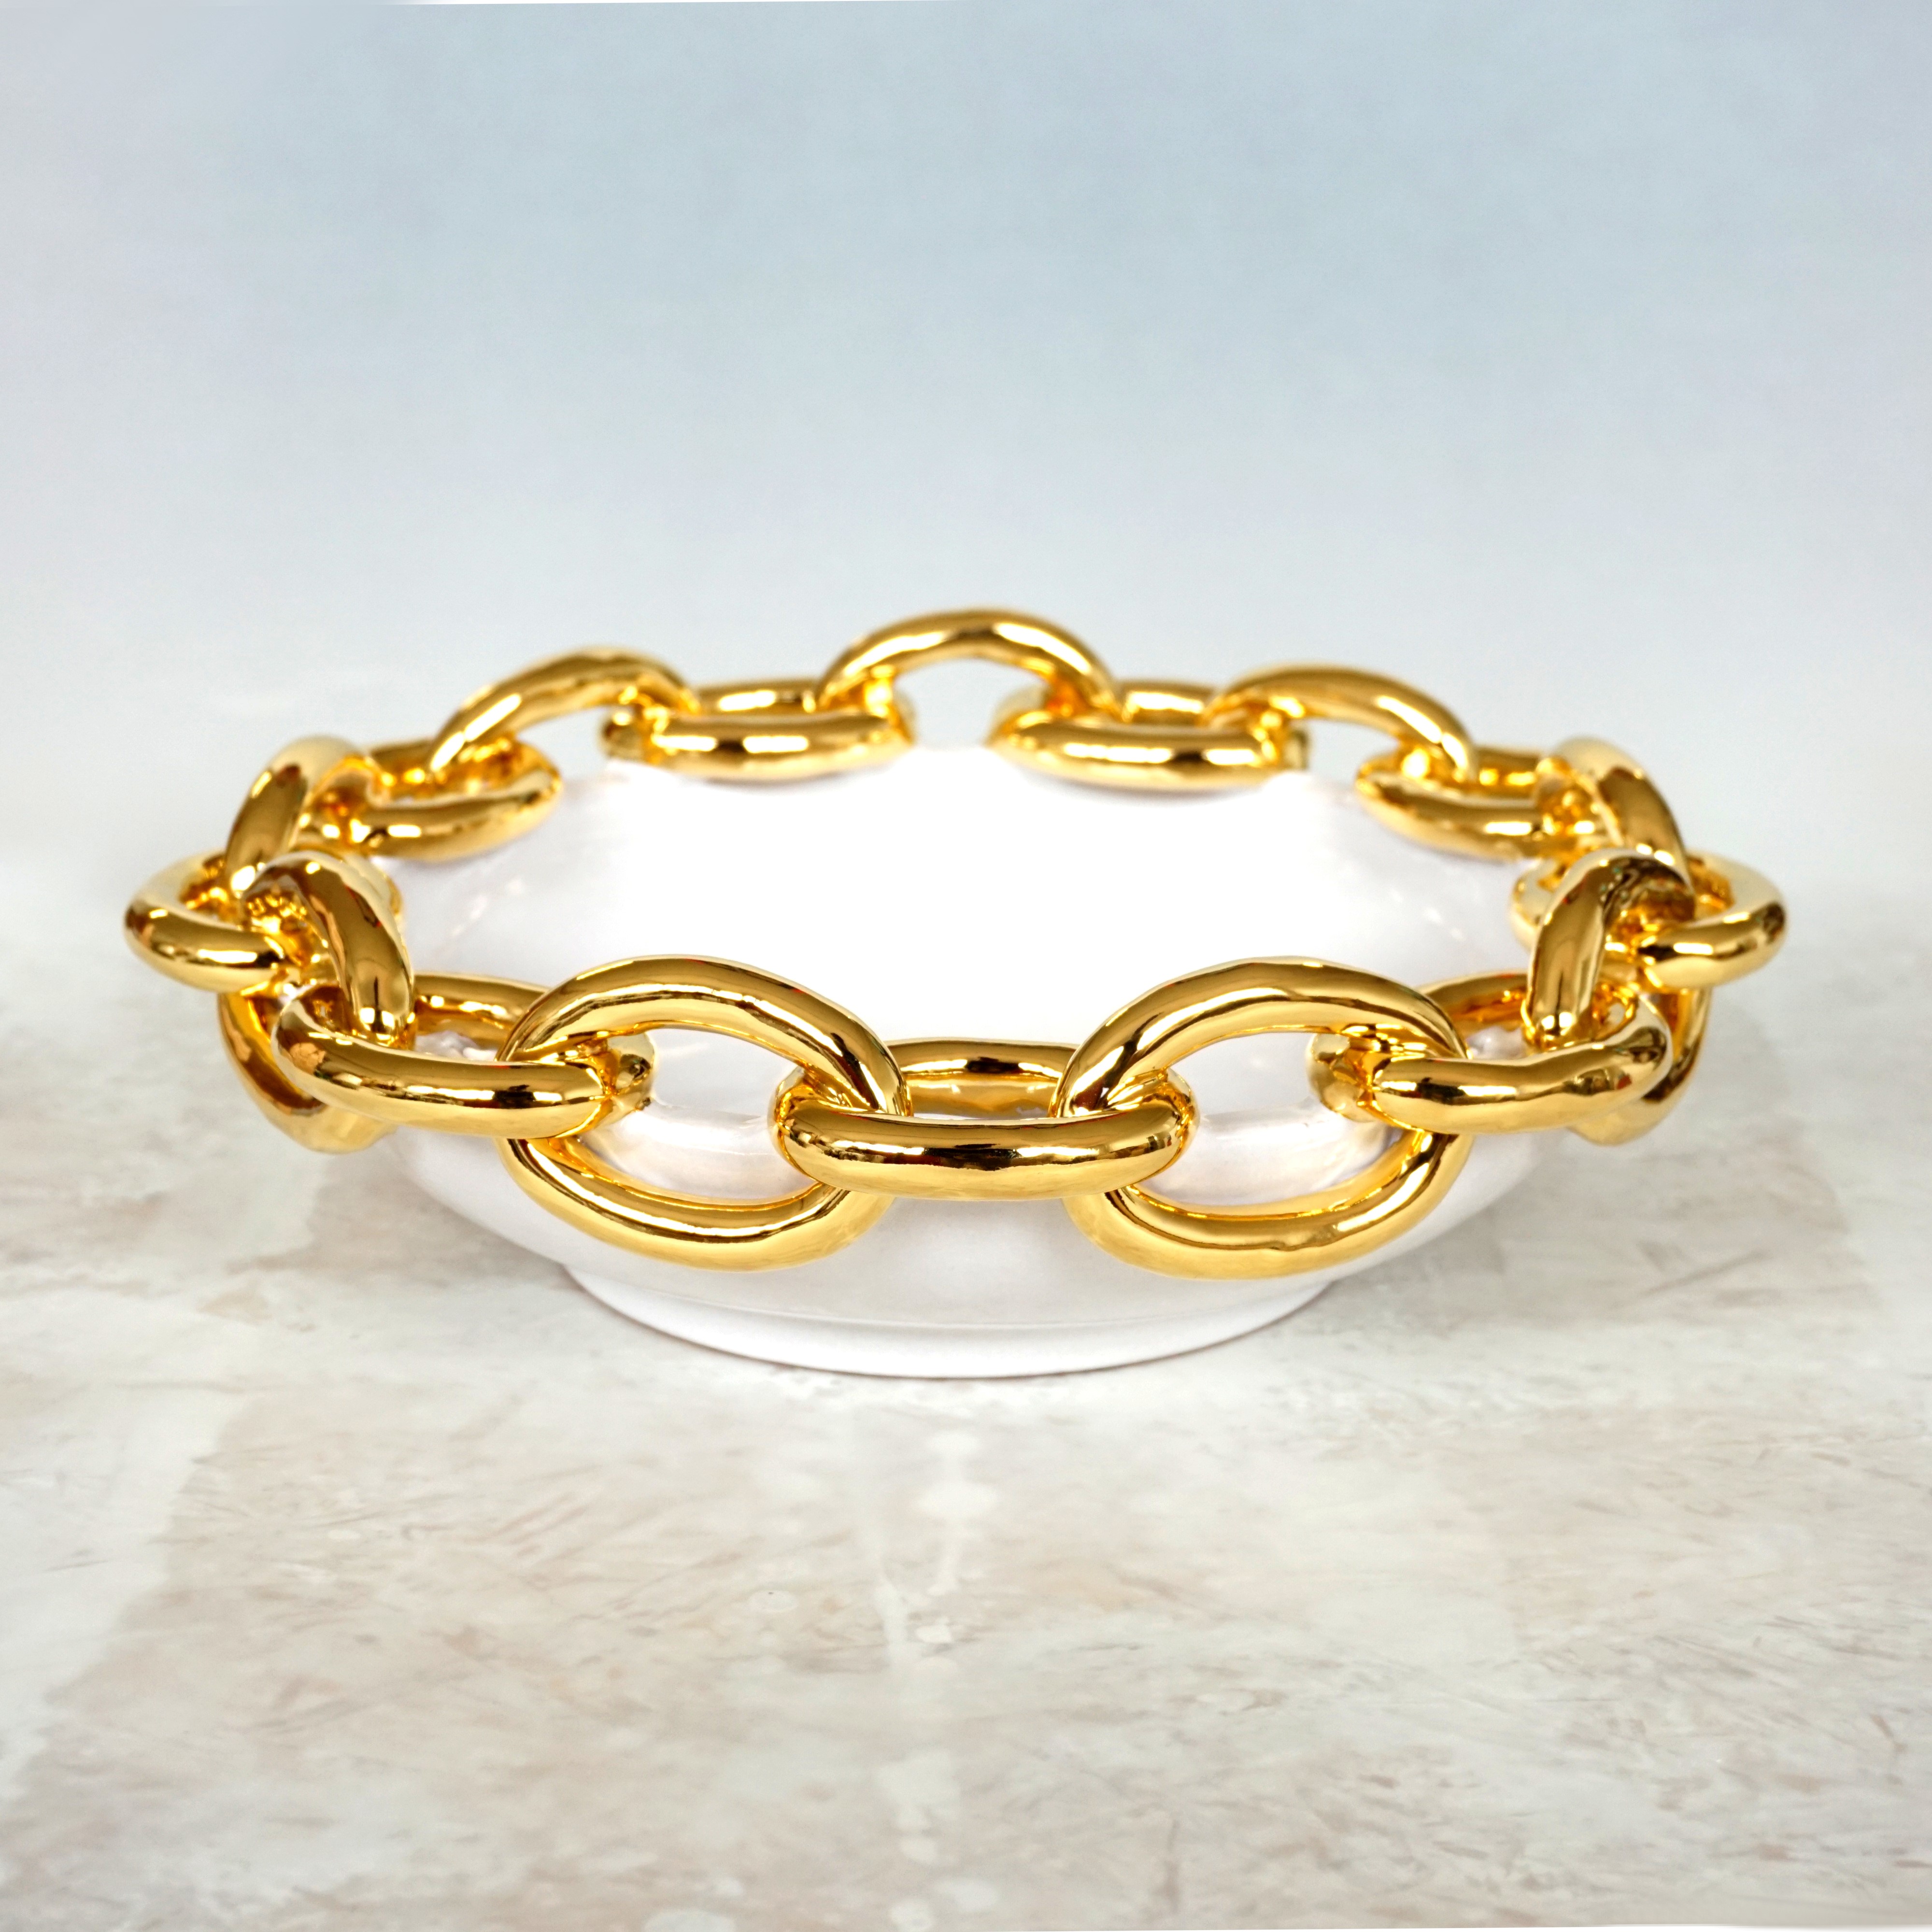 Ceramica White Bowl with Golden Chain